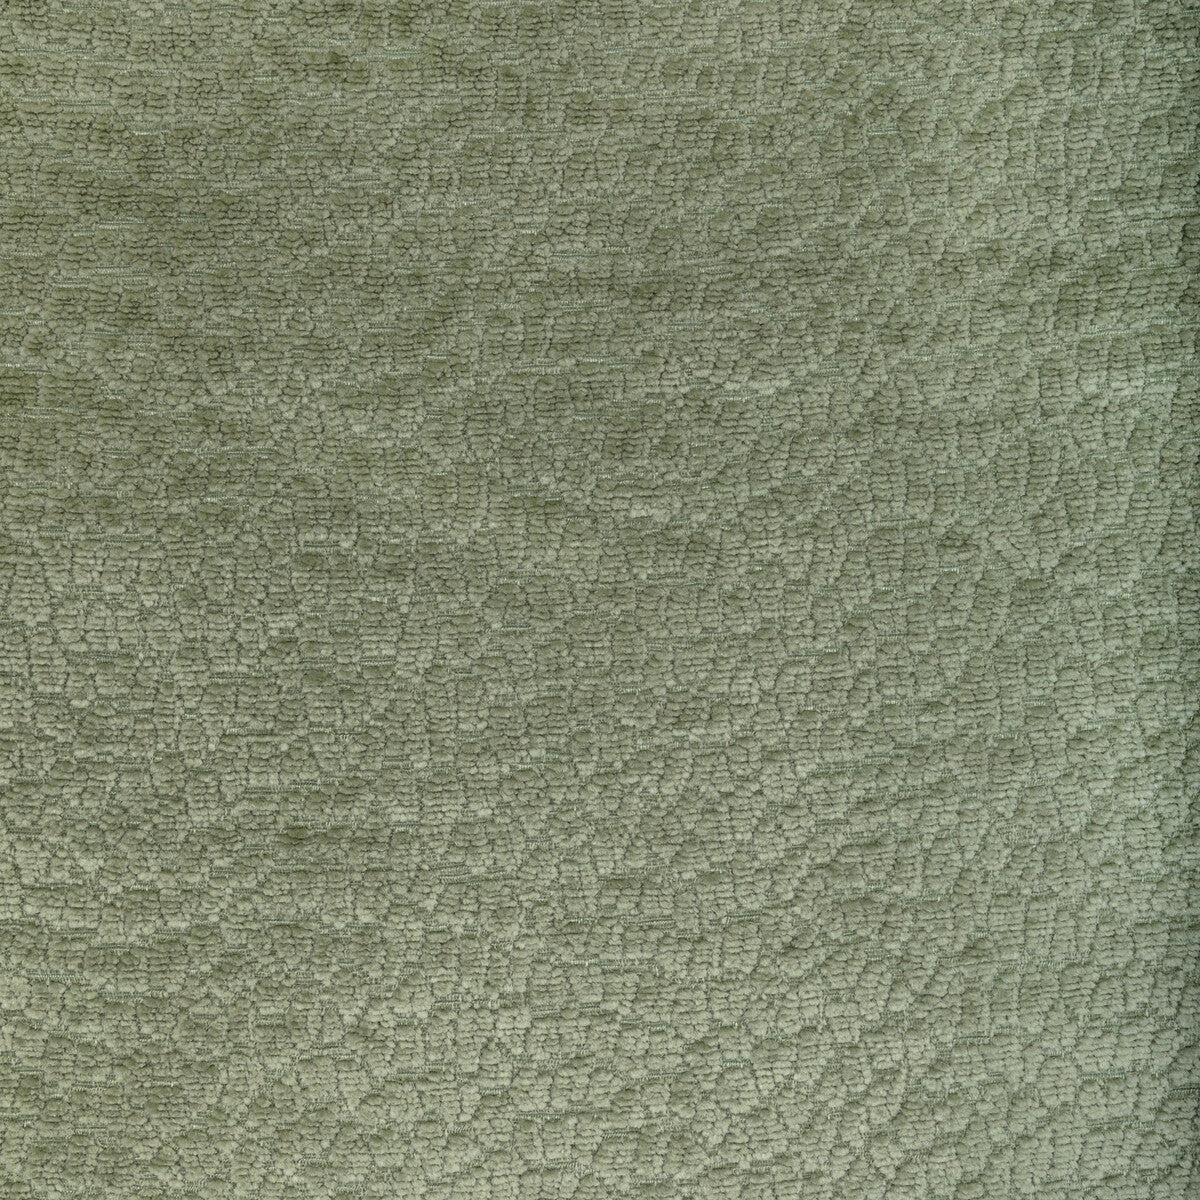 Kravet Smart fabric in 36606-303 color - pattern 36606.303.0 - by Kravet Smart in the Performance Kravetarmor collection